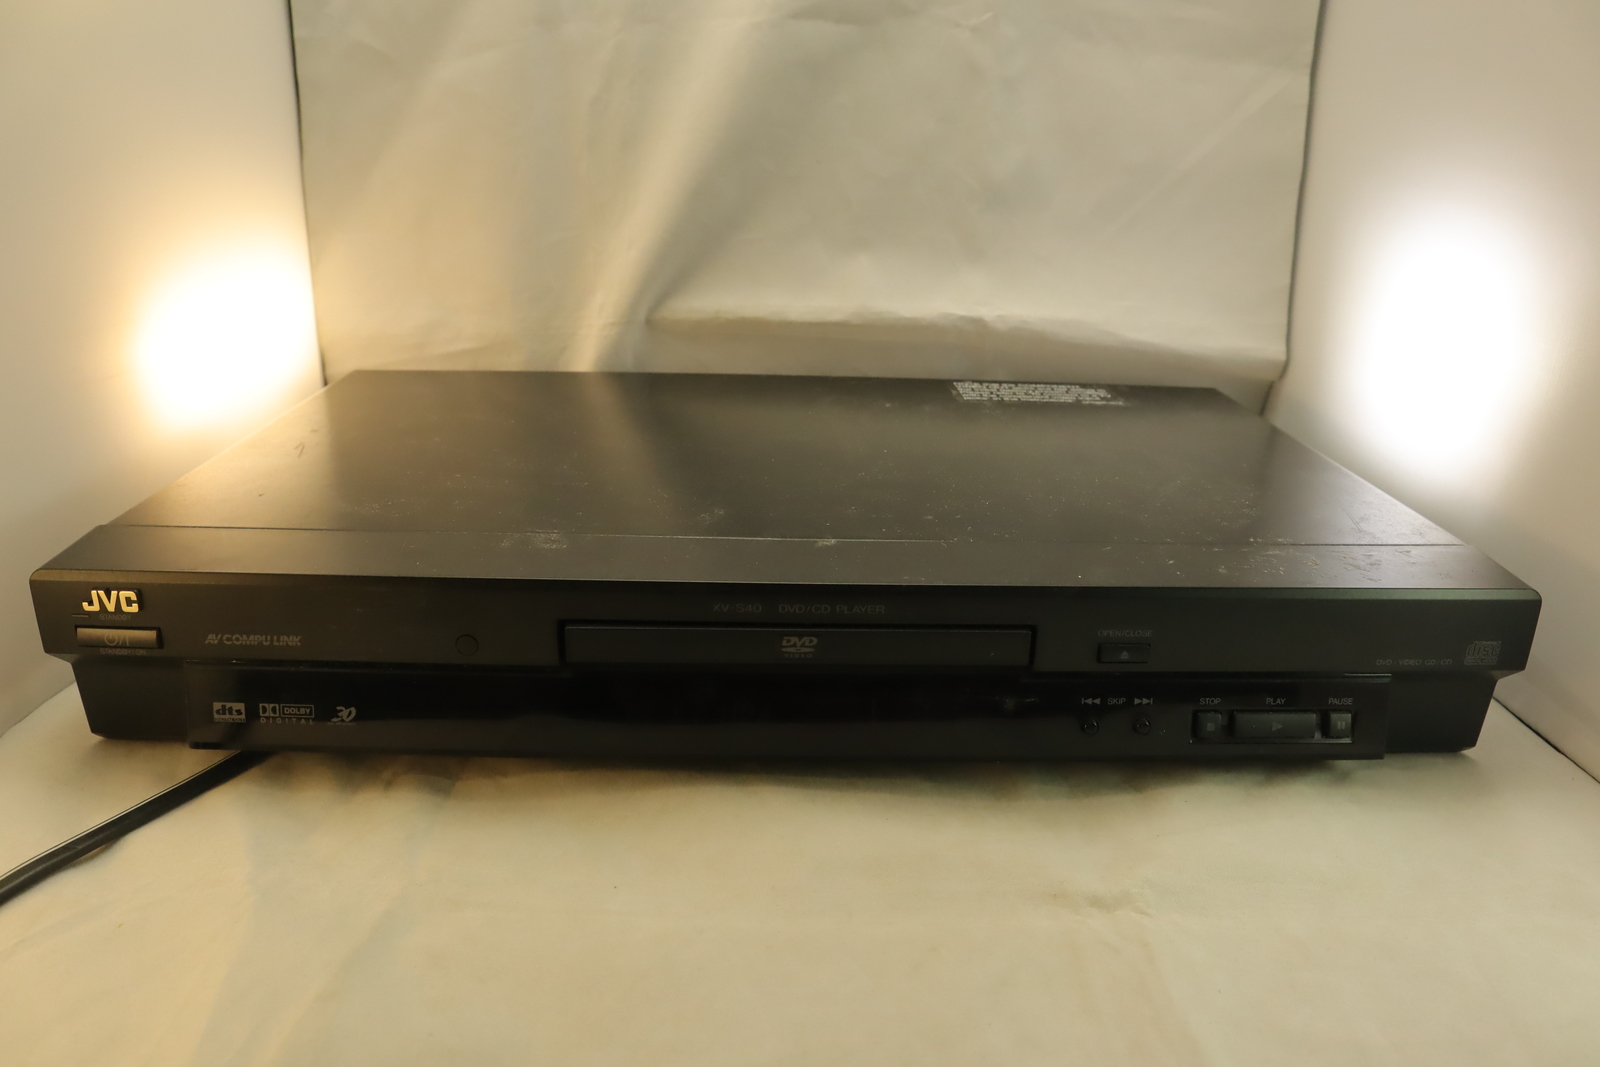 JVC XV-S40 AV Compulink 1997 Component CD DVD Player With Remote - $45.42